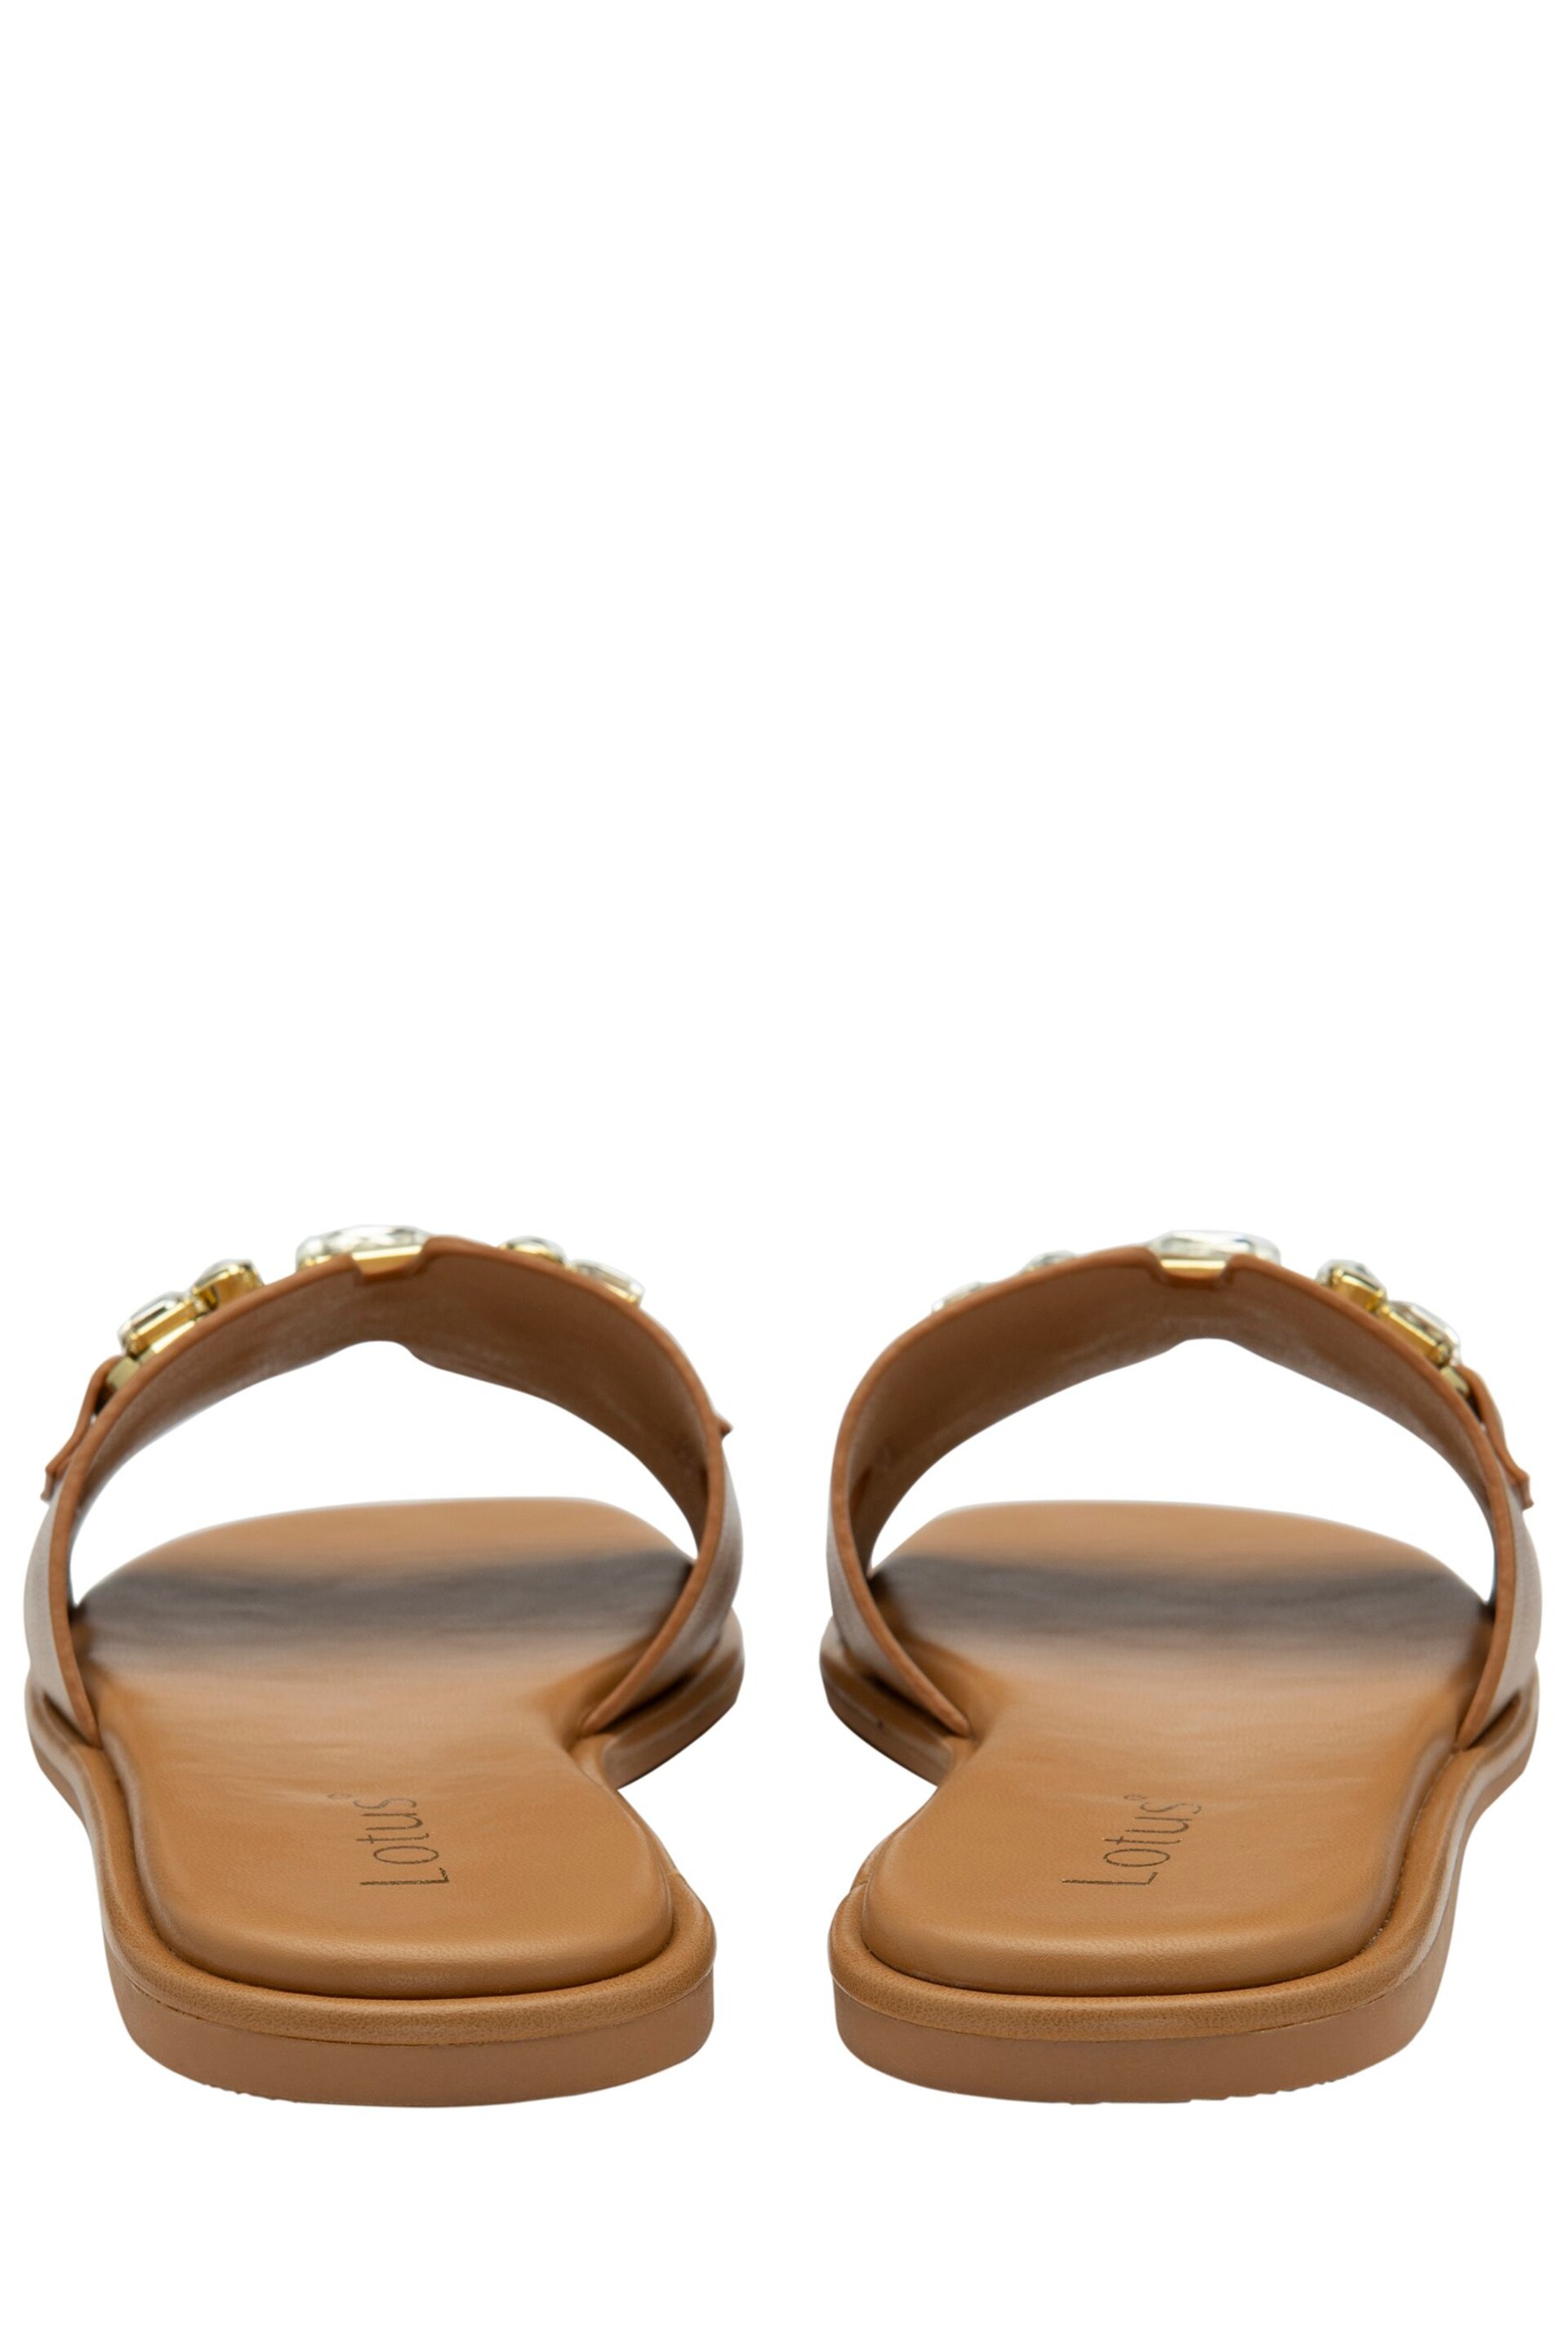 Lotus Brown Flat Slider Sandals - Image 3 of 4